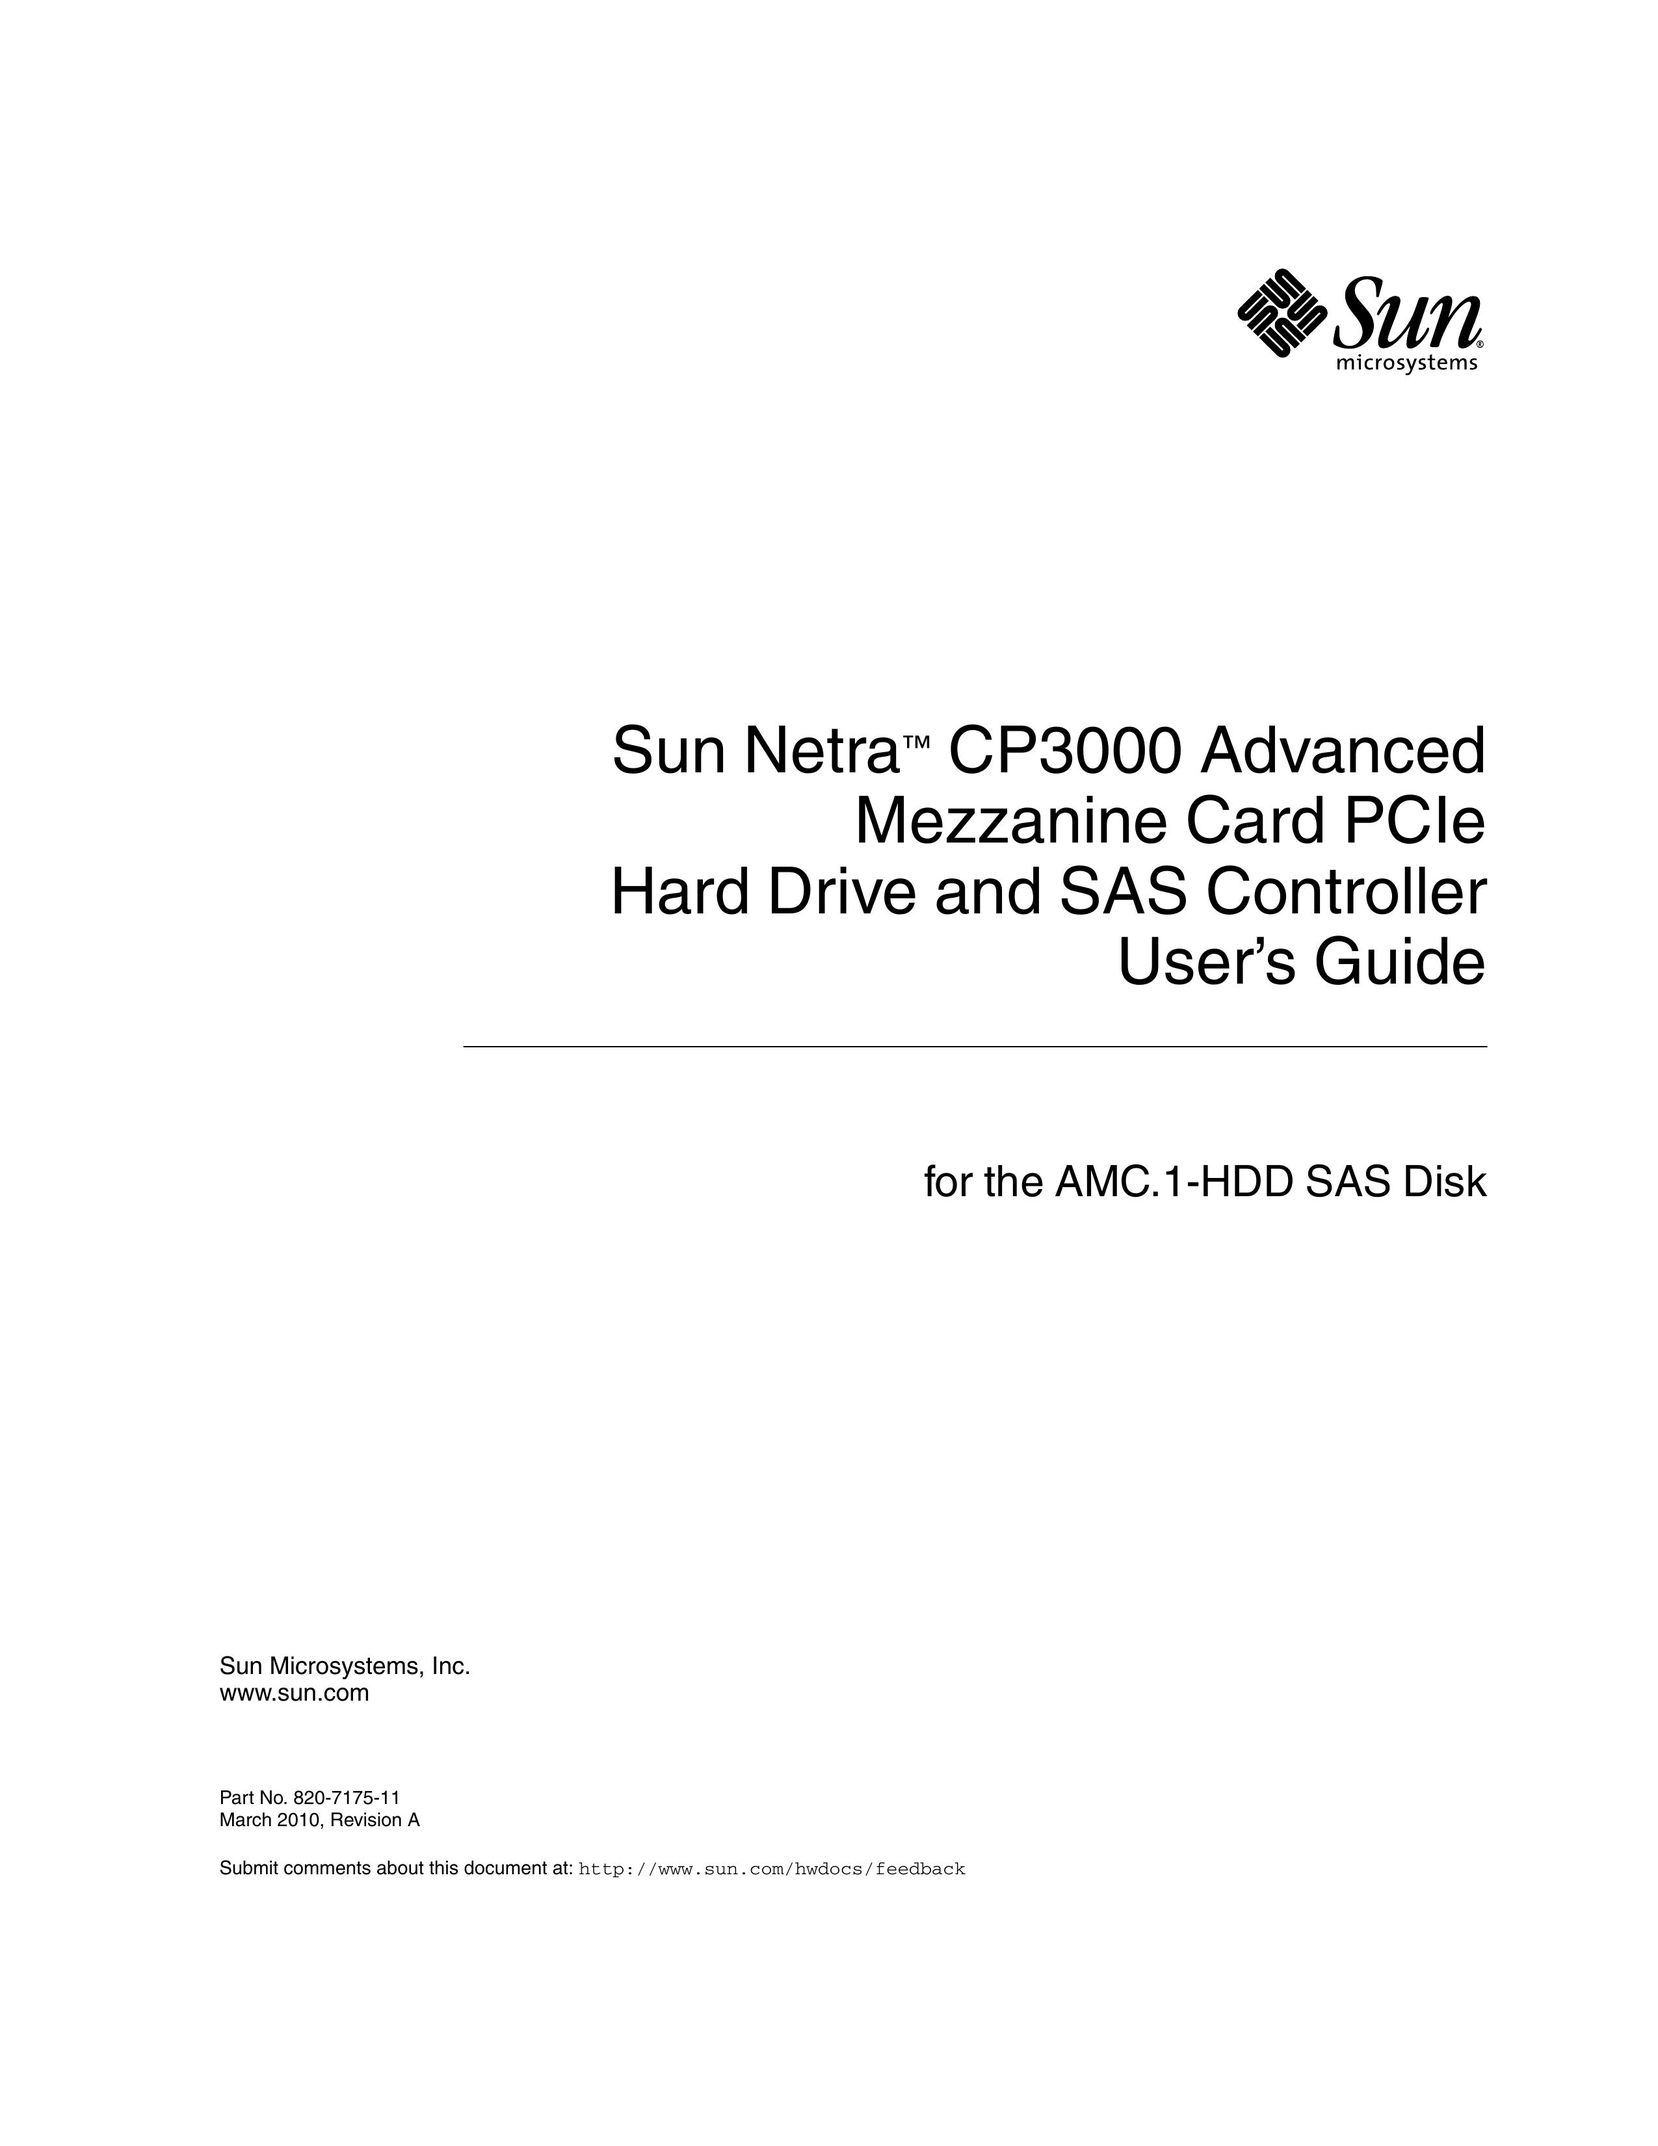 Sun Microsystems CP3000 Computer Drive User Manual